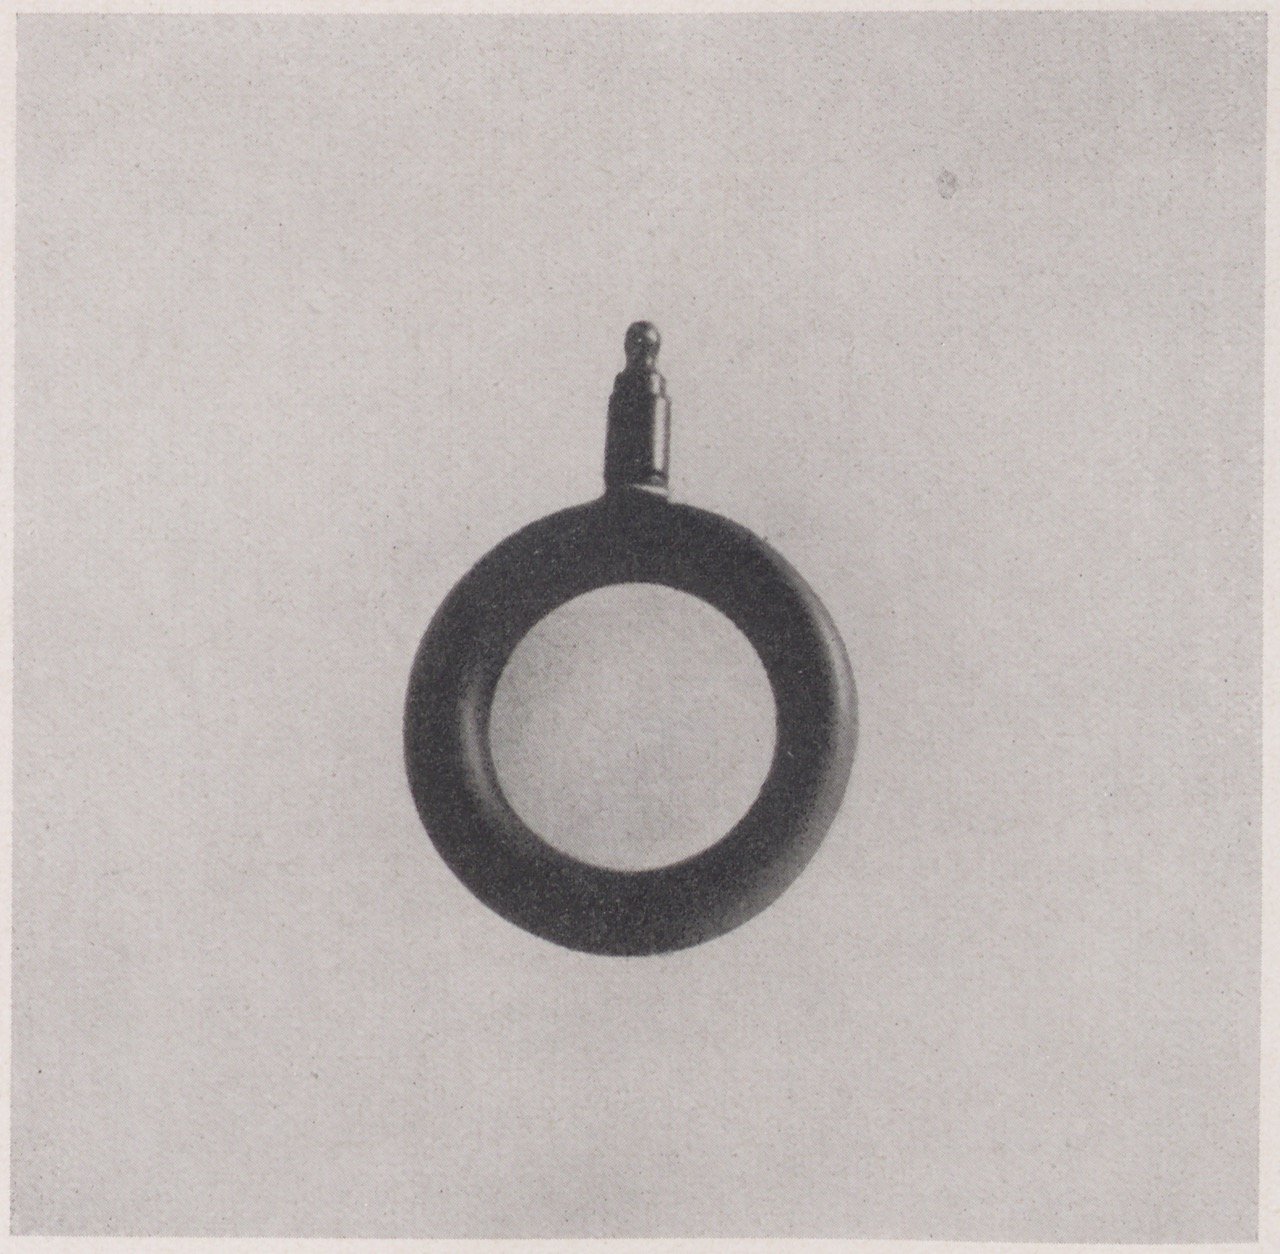 Abbildung des „Potentors“ (Hilfsmittel zur Steigerung des Potenz) (Magnus-Hirschfeld-Gesellschaft Public Domain Mark)